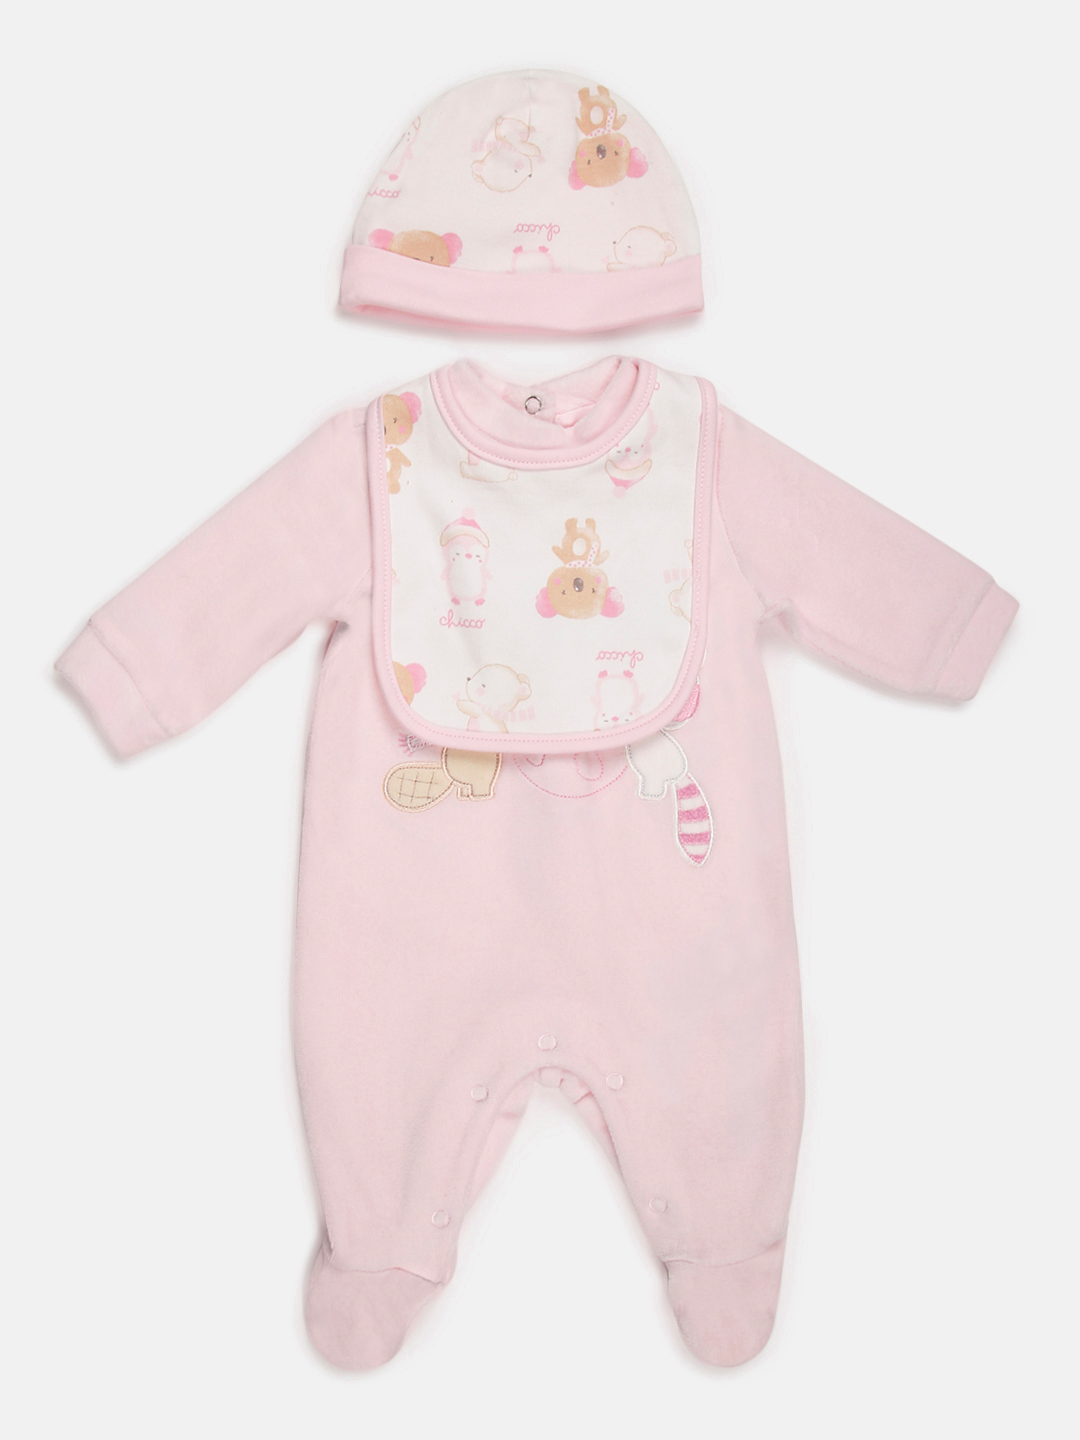 Gift Box- Velour Babysuit, Bib And Hat-Pink